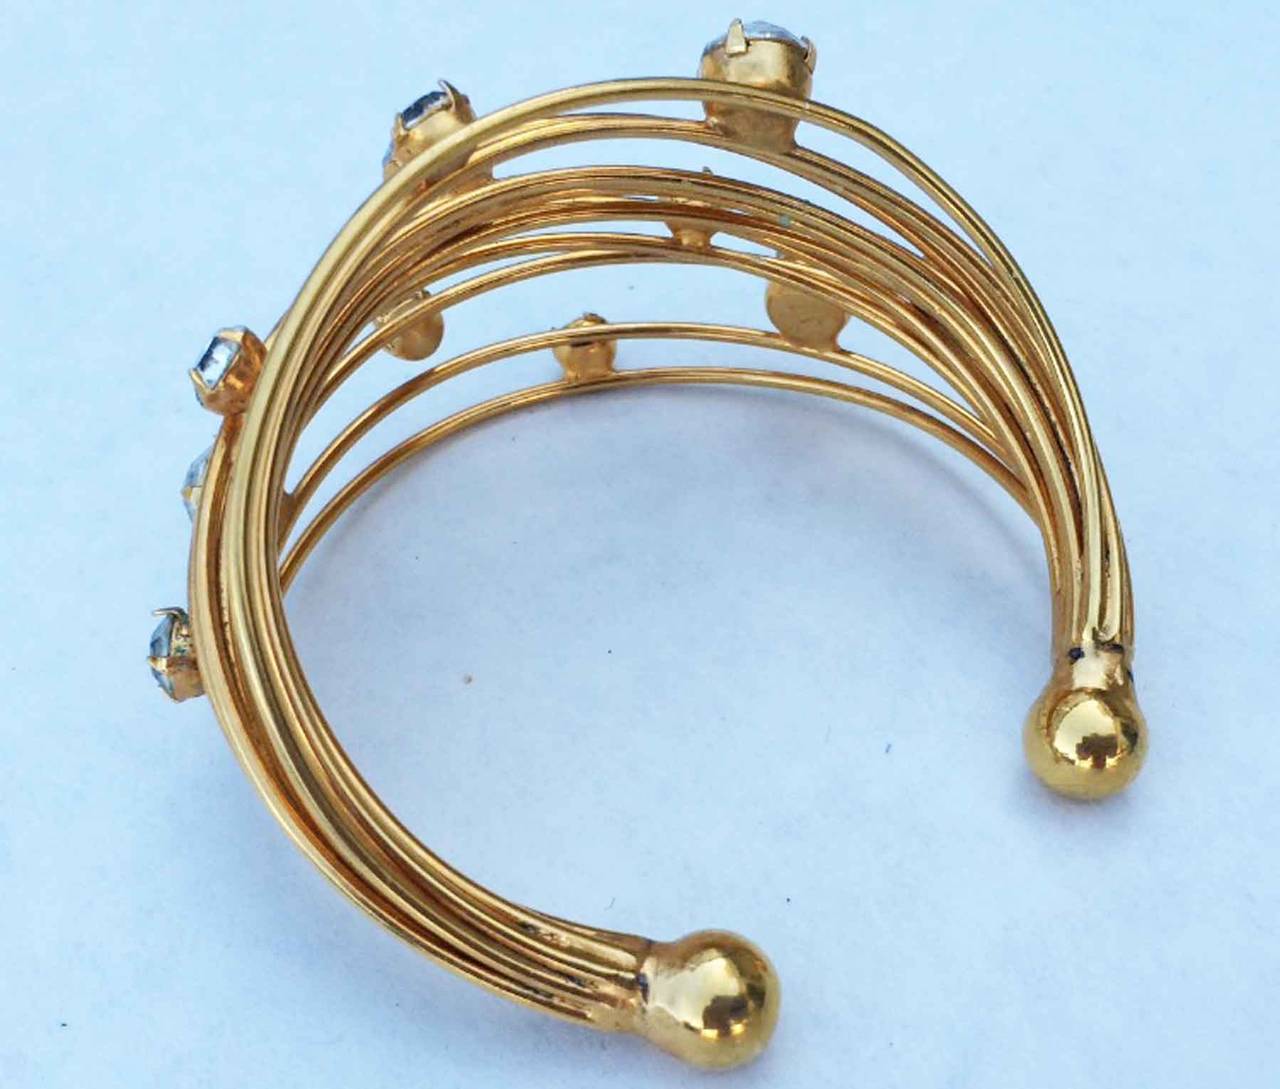 A fine vintage William de Lillo cuff bracelet. Signed gilt metal wire item set wit various size Swarovski crystals. Unworn item from the Wm. de Lillo archives.